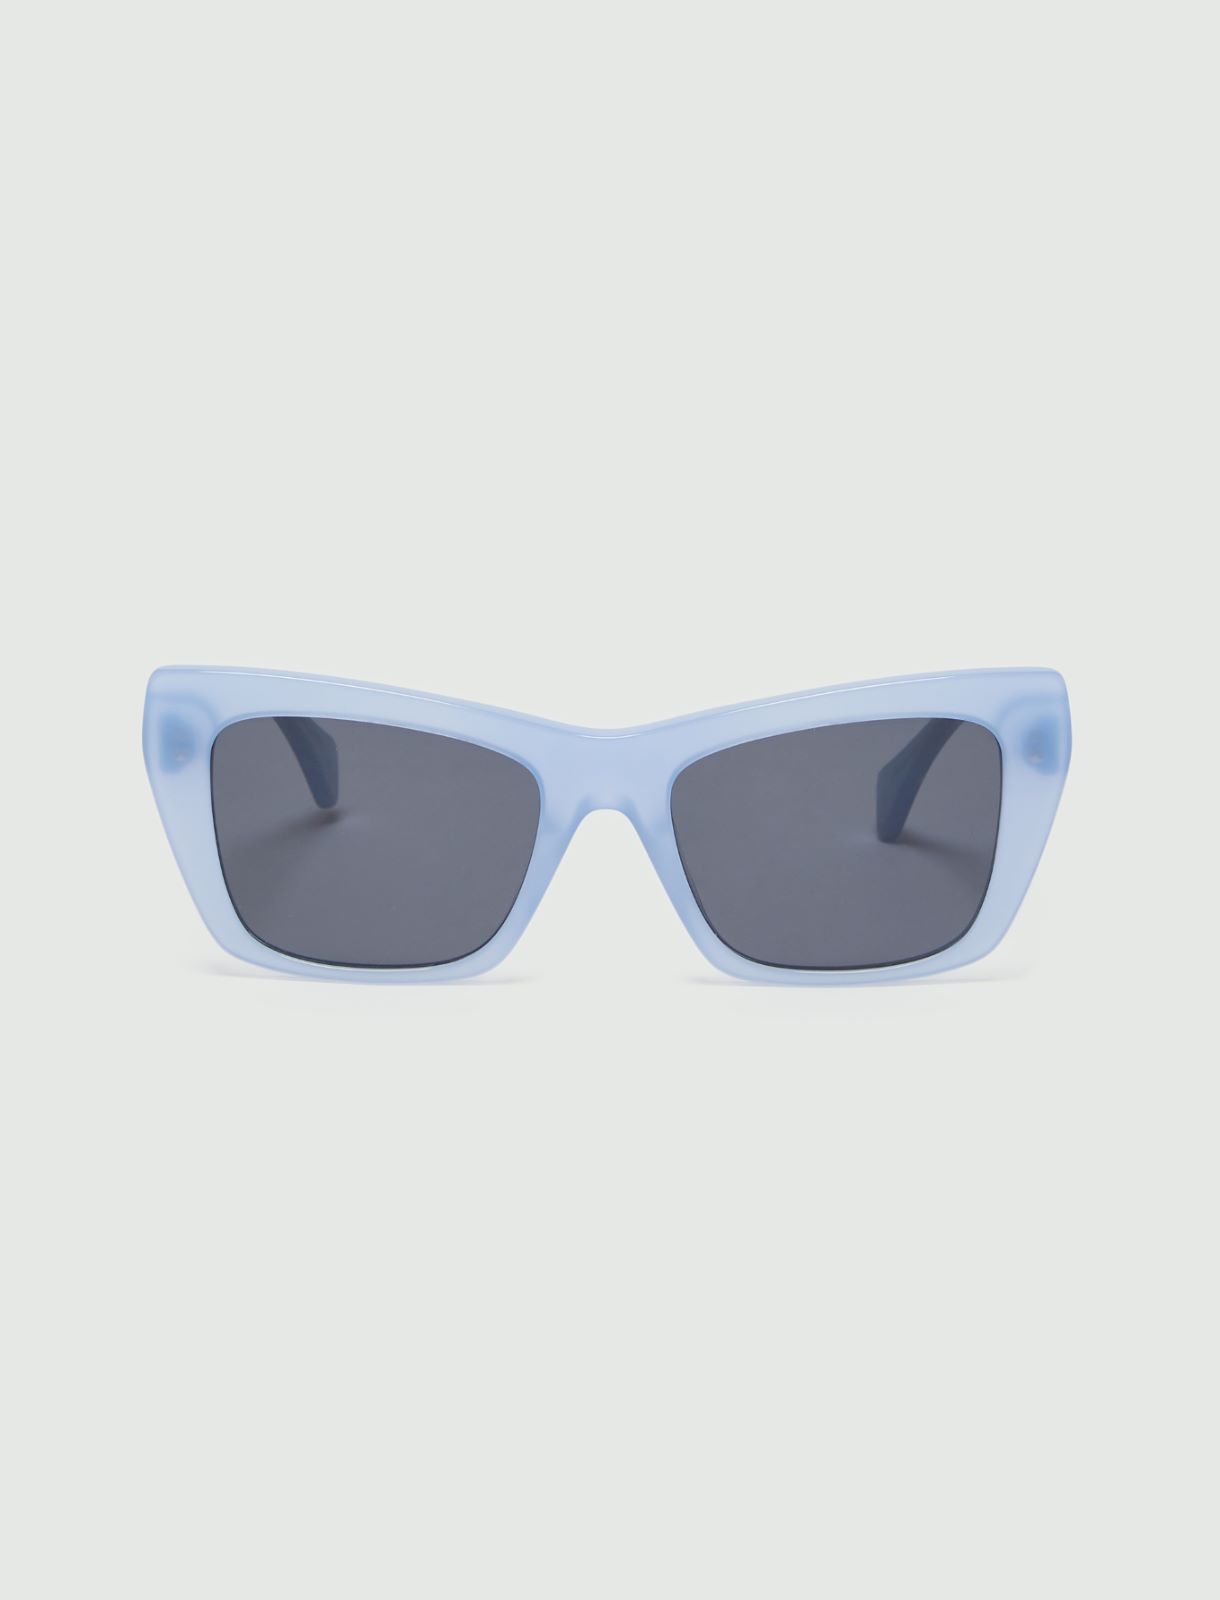 Cat-eye sunglasses - Light blue - Marella